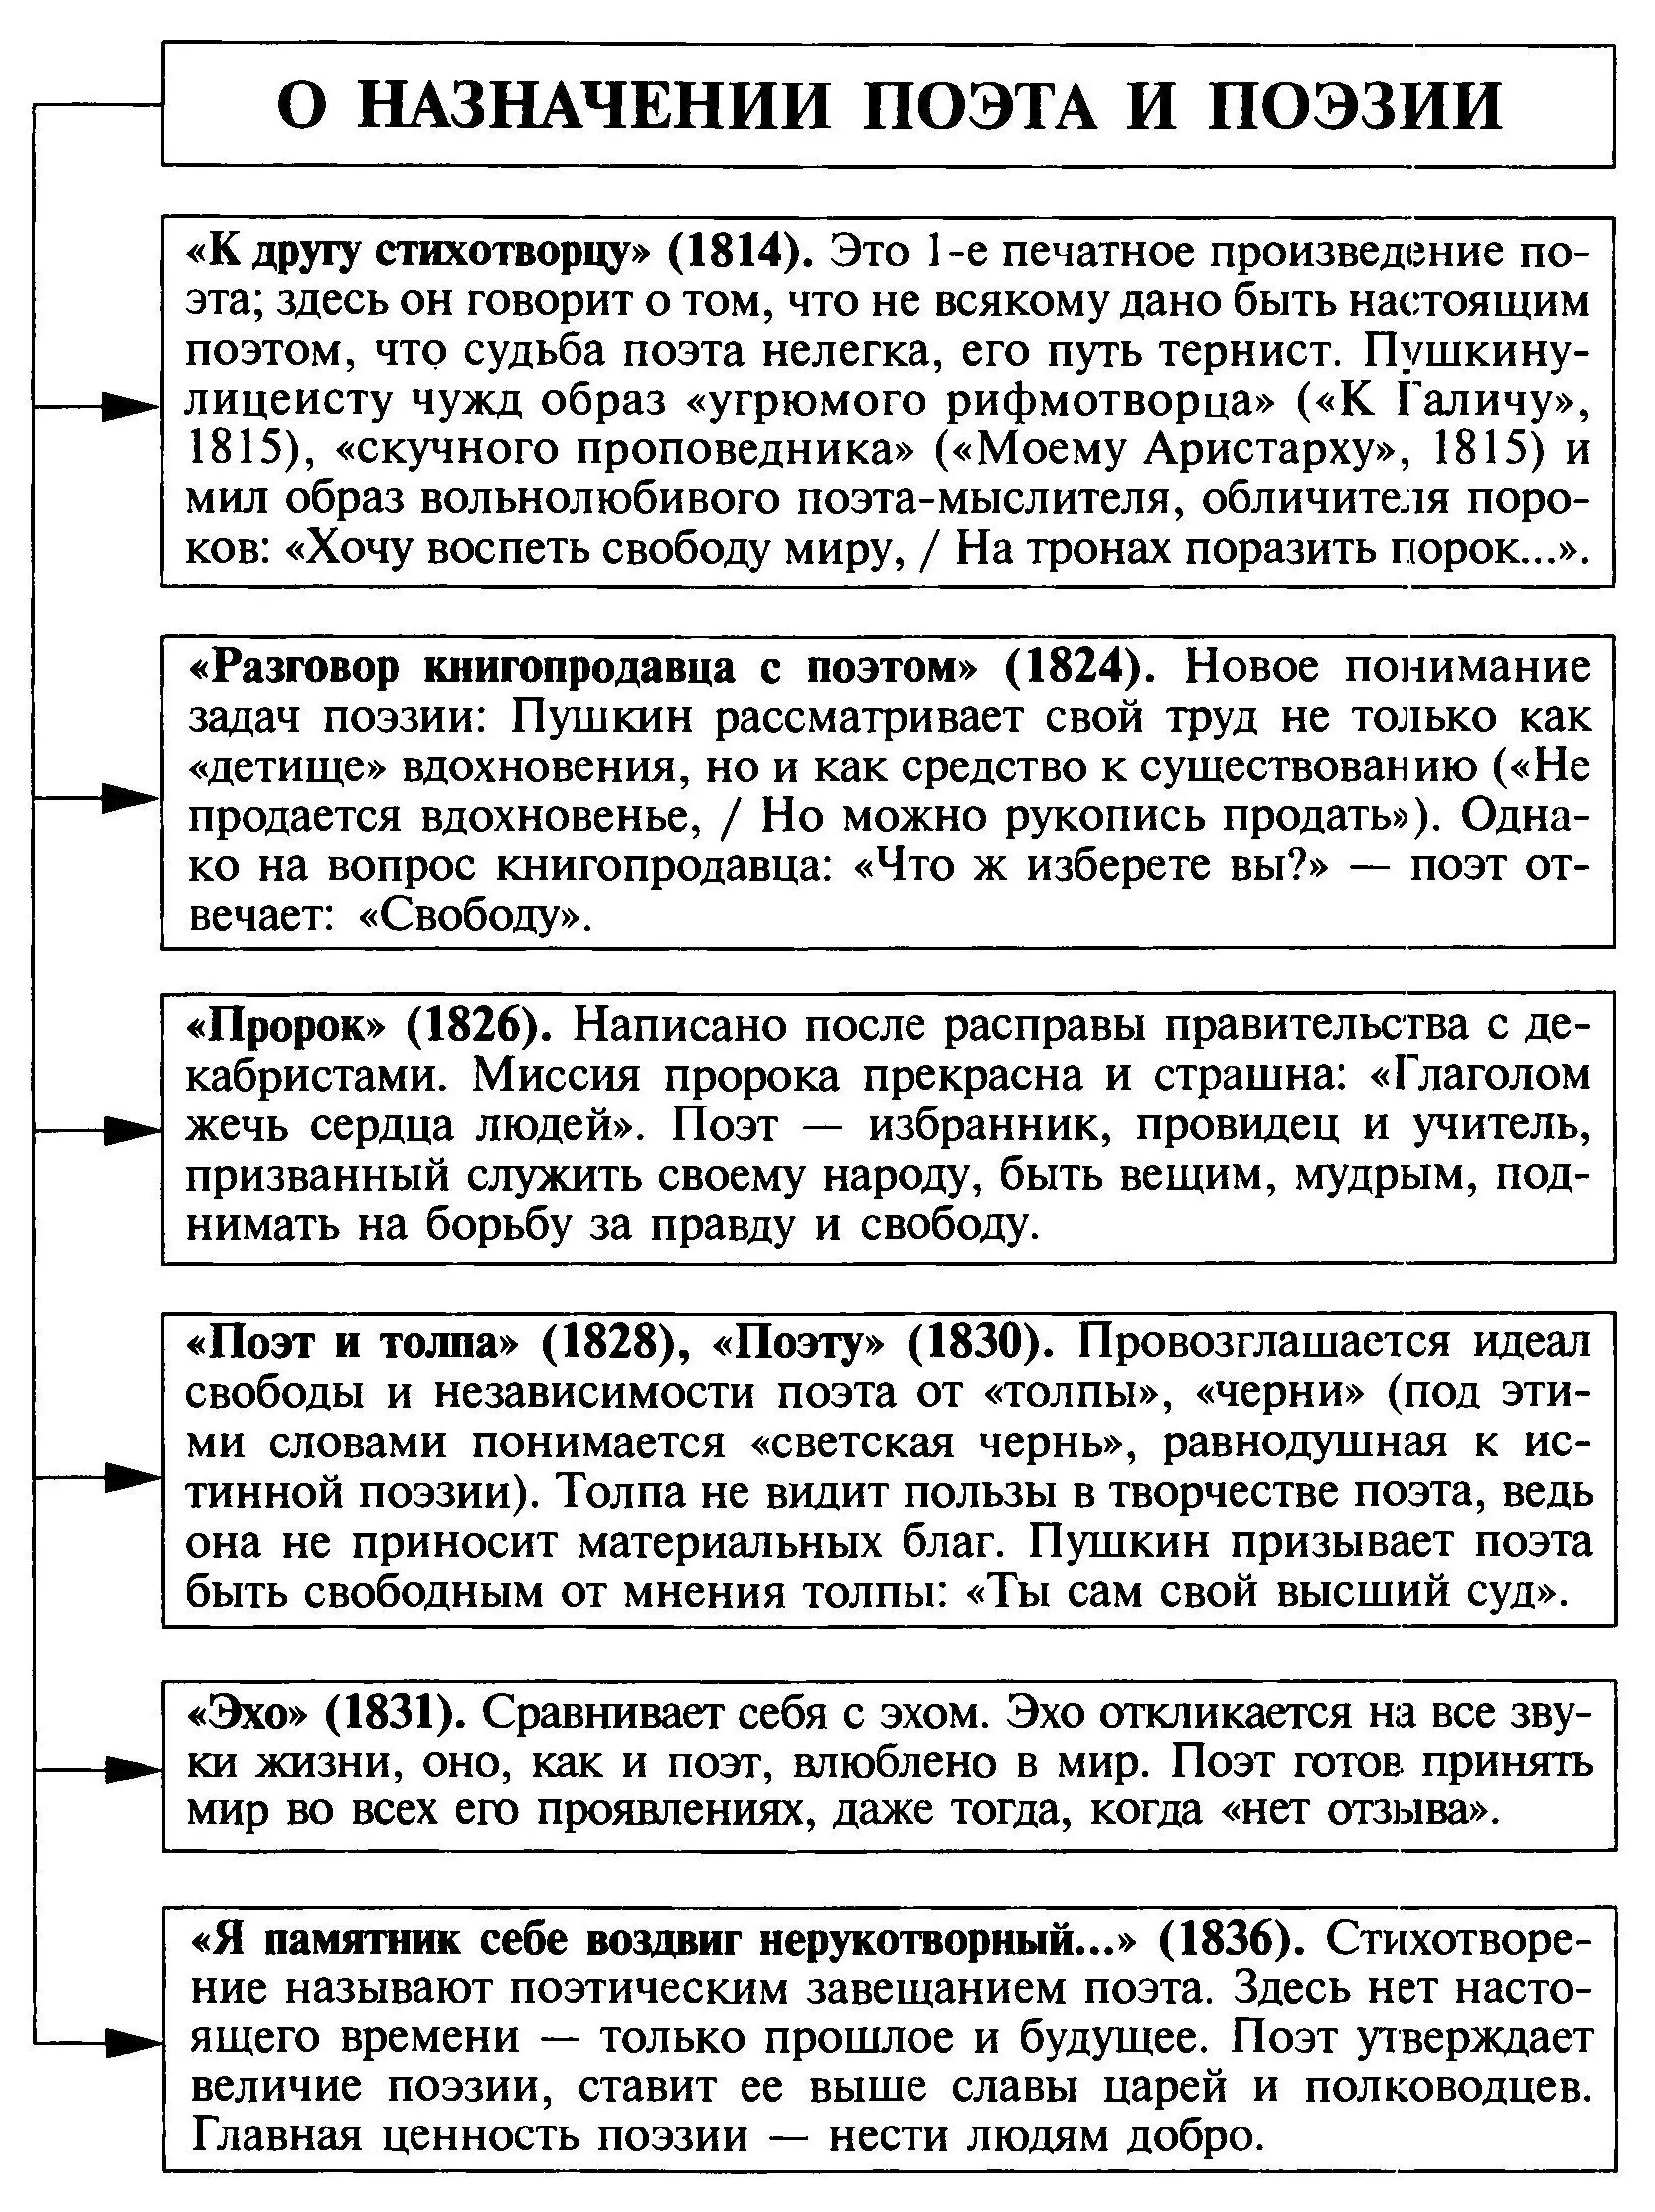 Мотивы лирики Пушкина таблица. Основной мотив лирики а.с Пушкина.